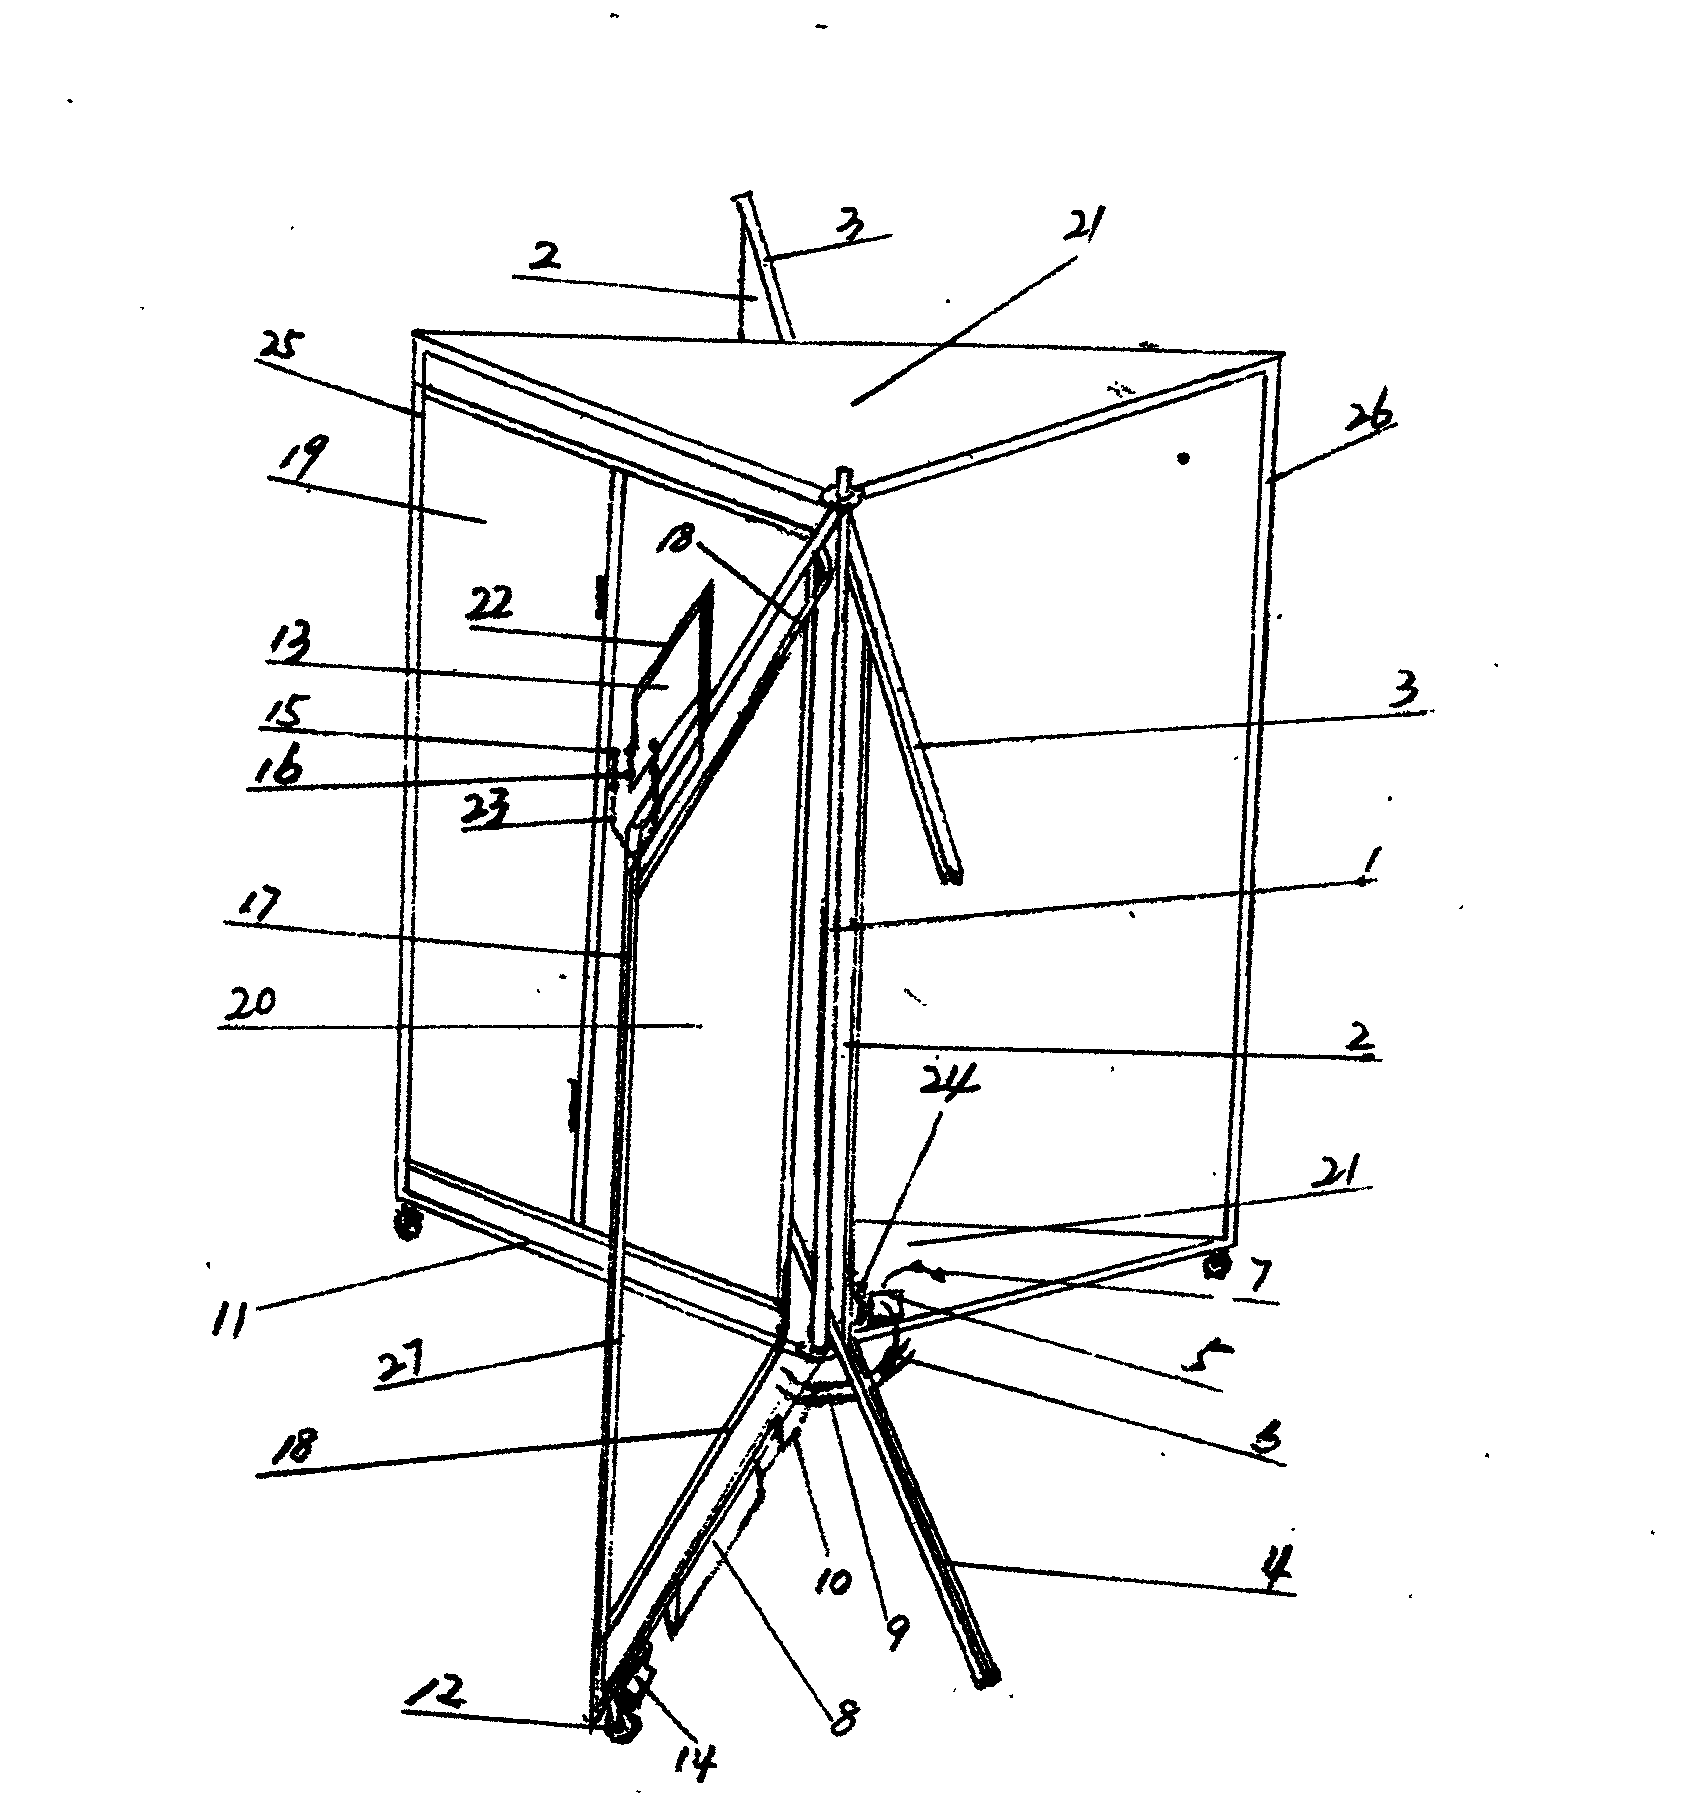 Full interception type vertical-axis windmill